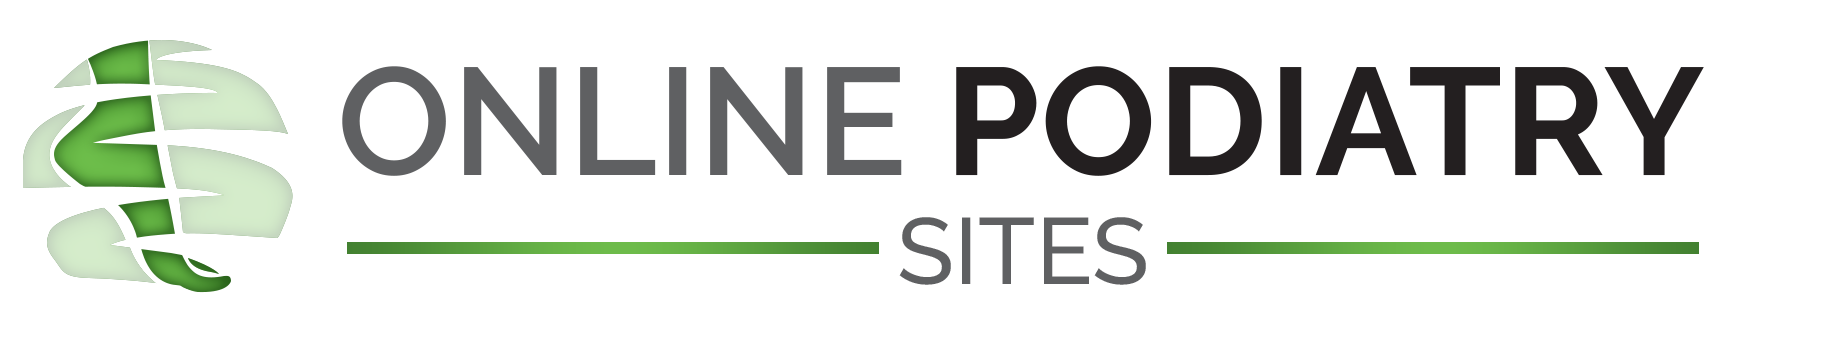 Online Podiatry Sites